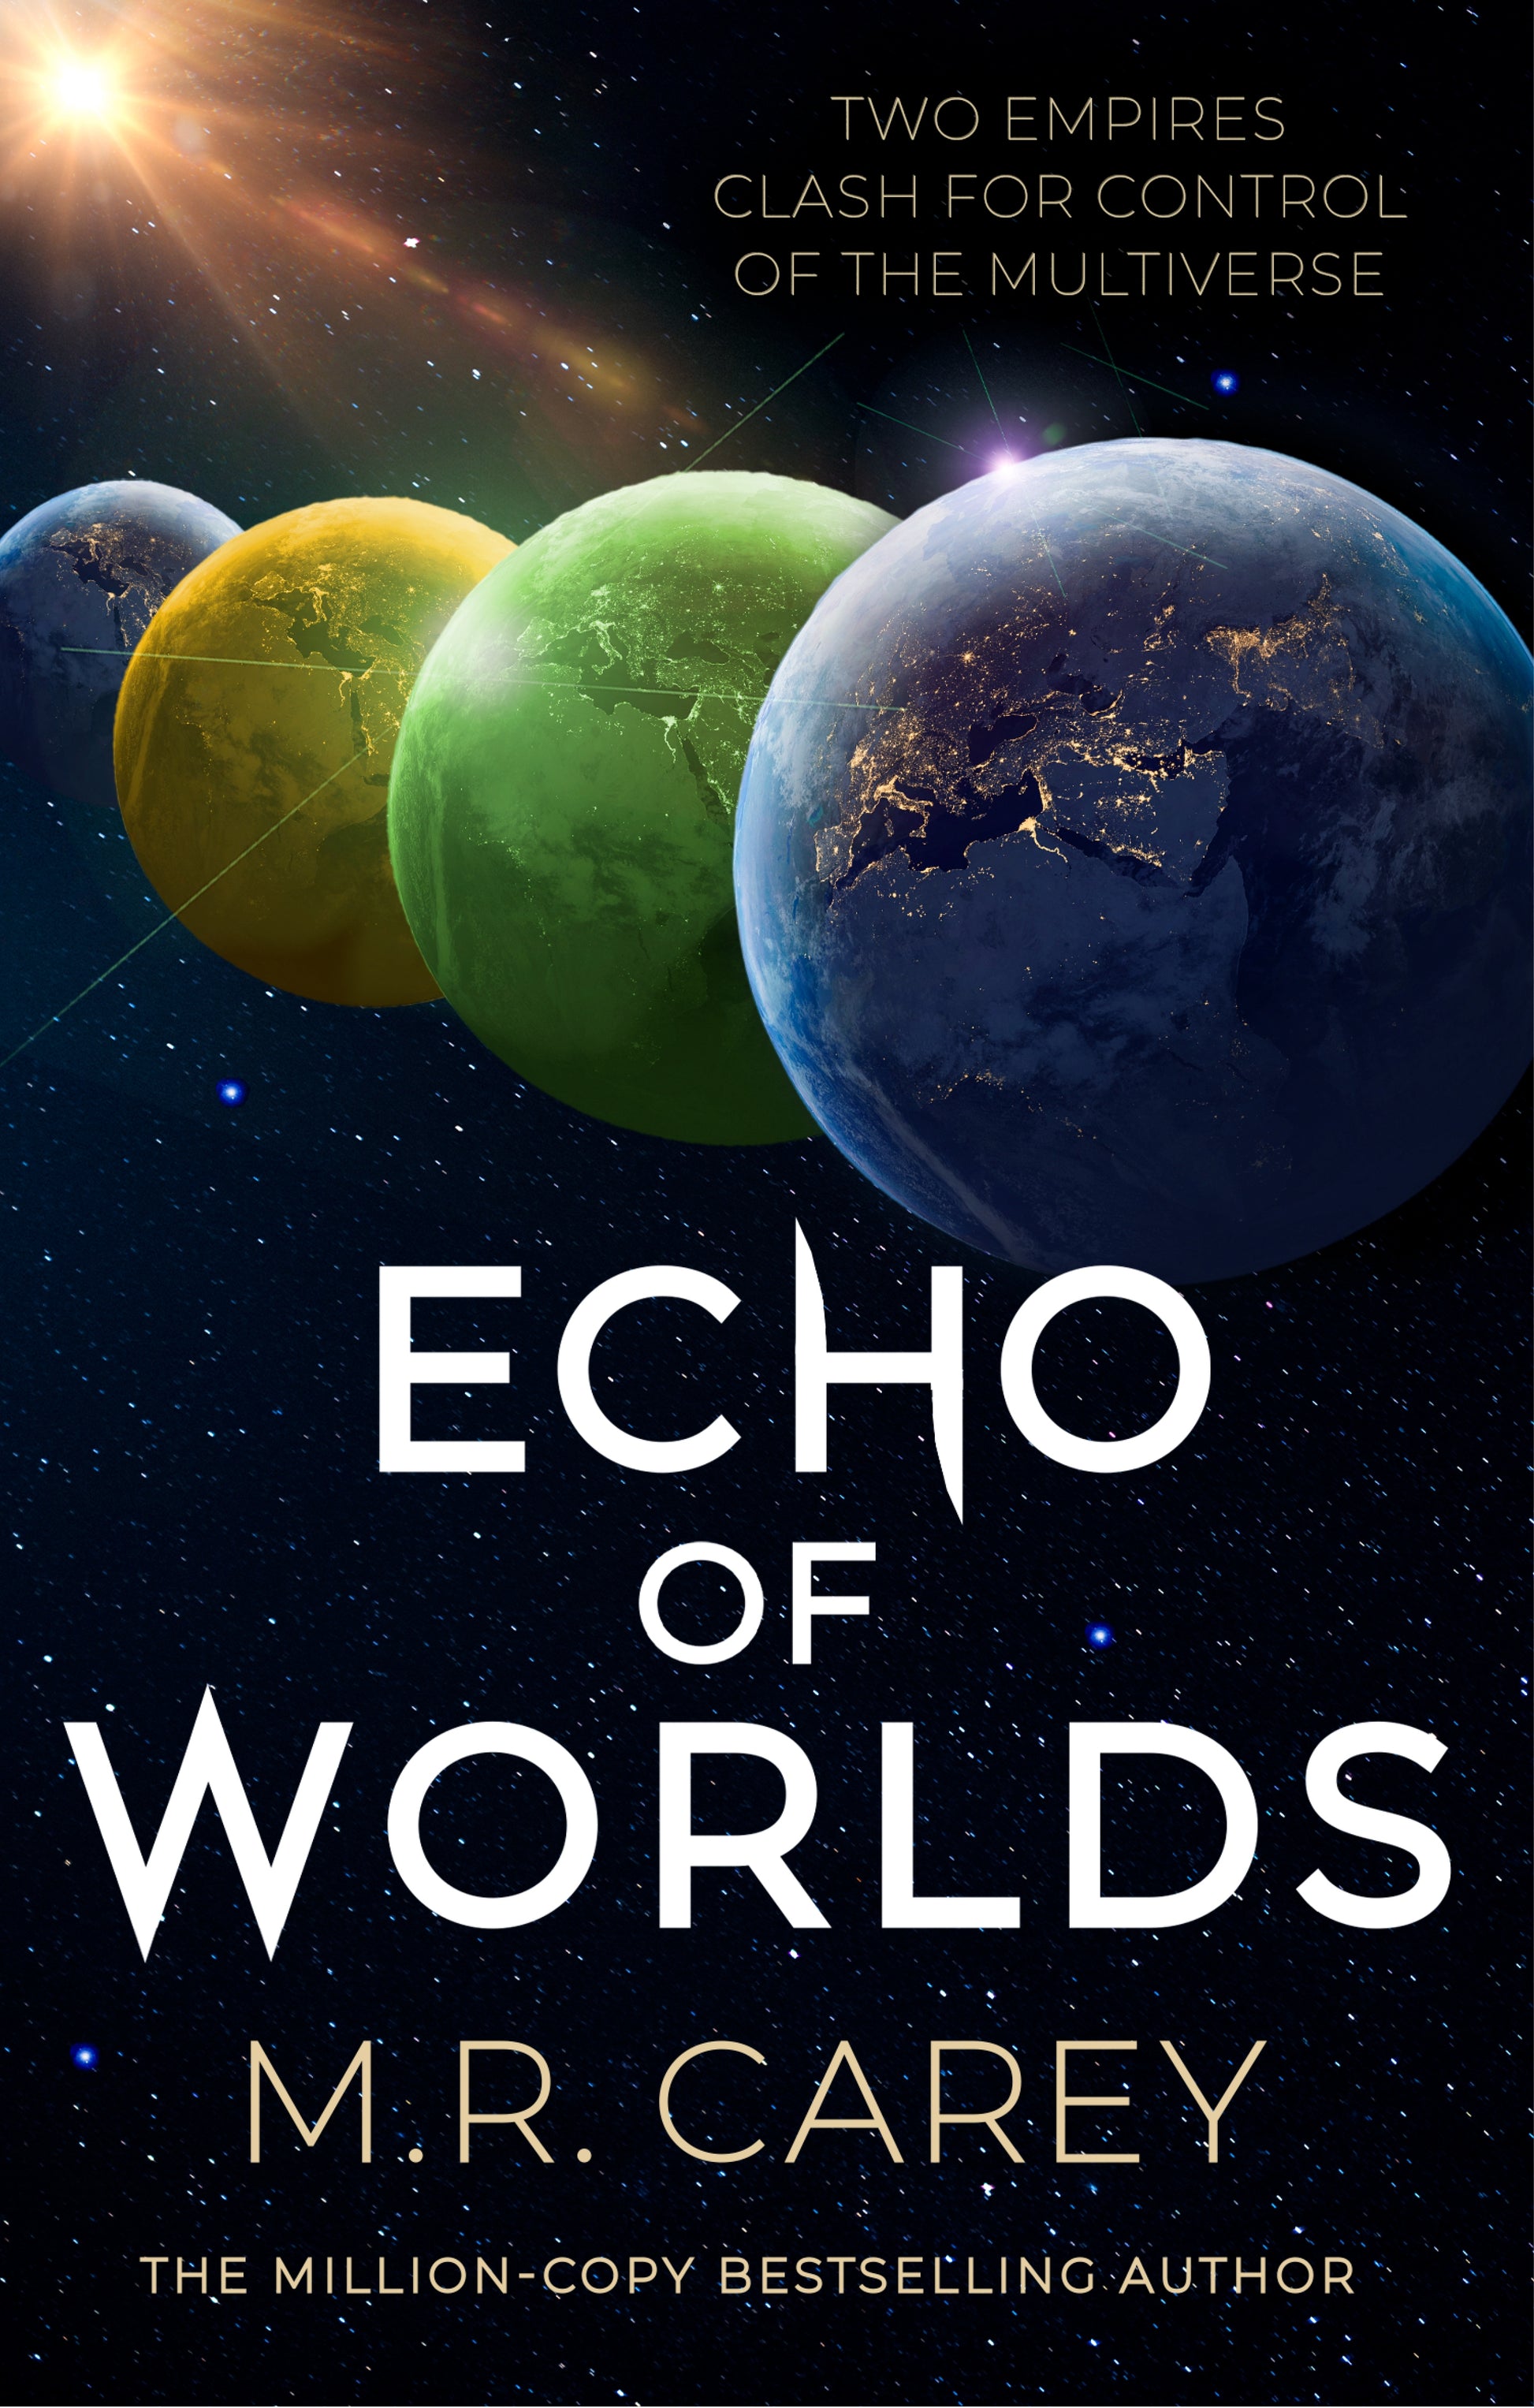 Echo of Worlds by M. R. Carey